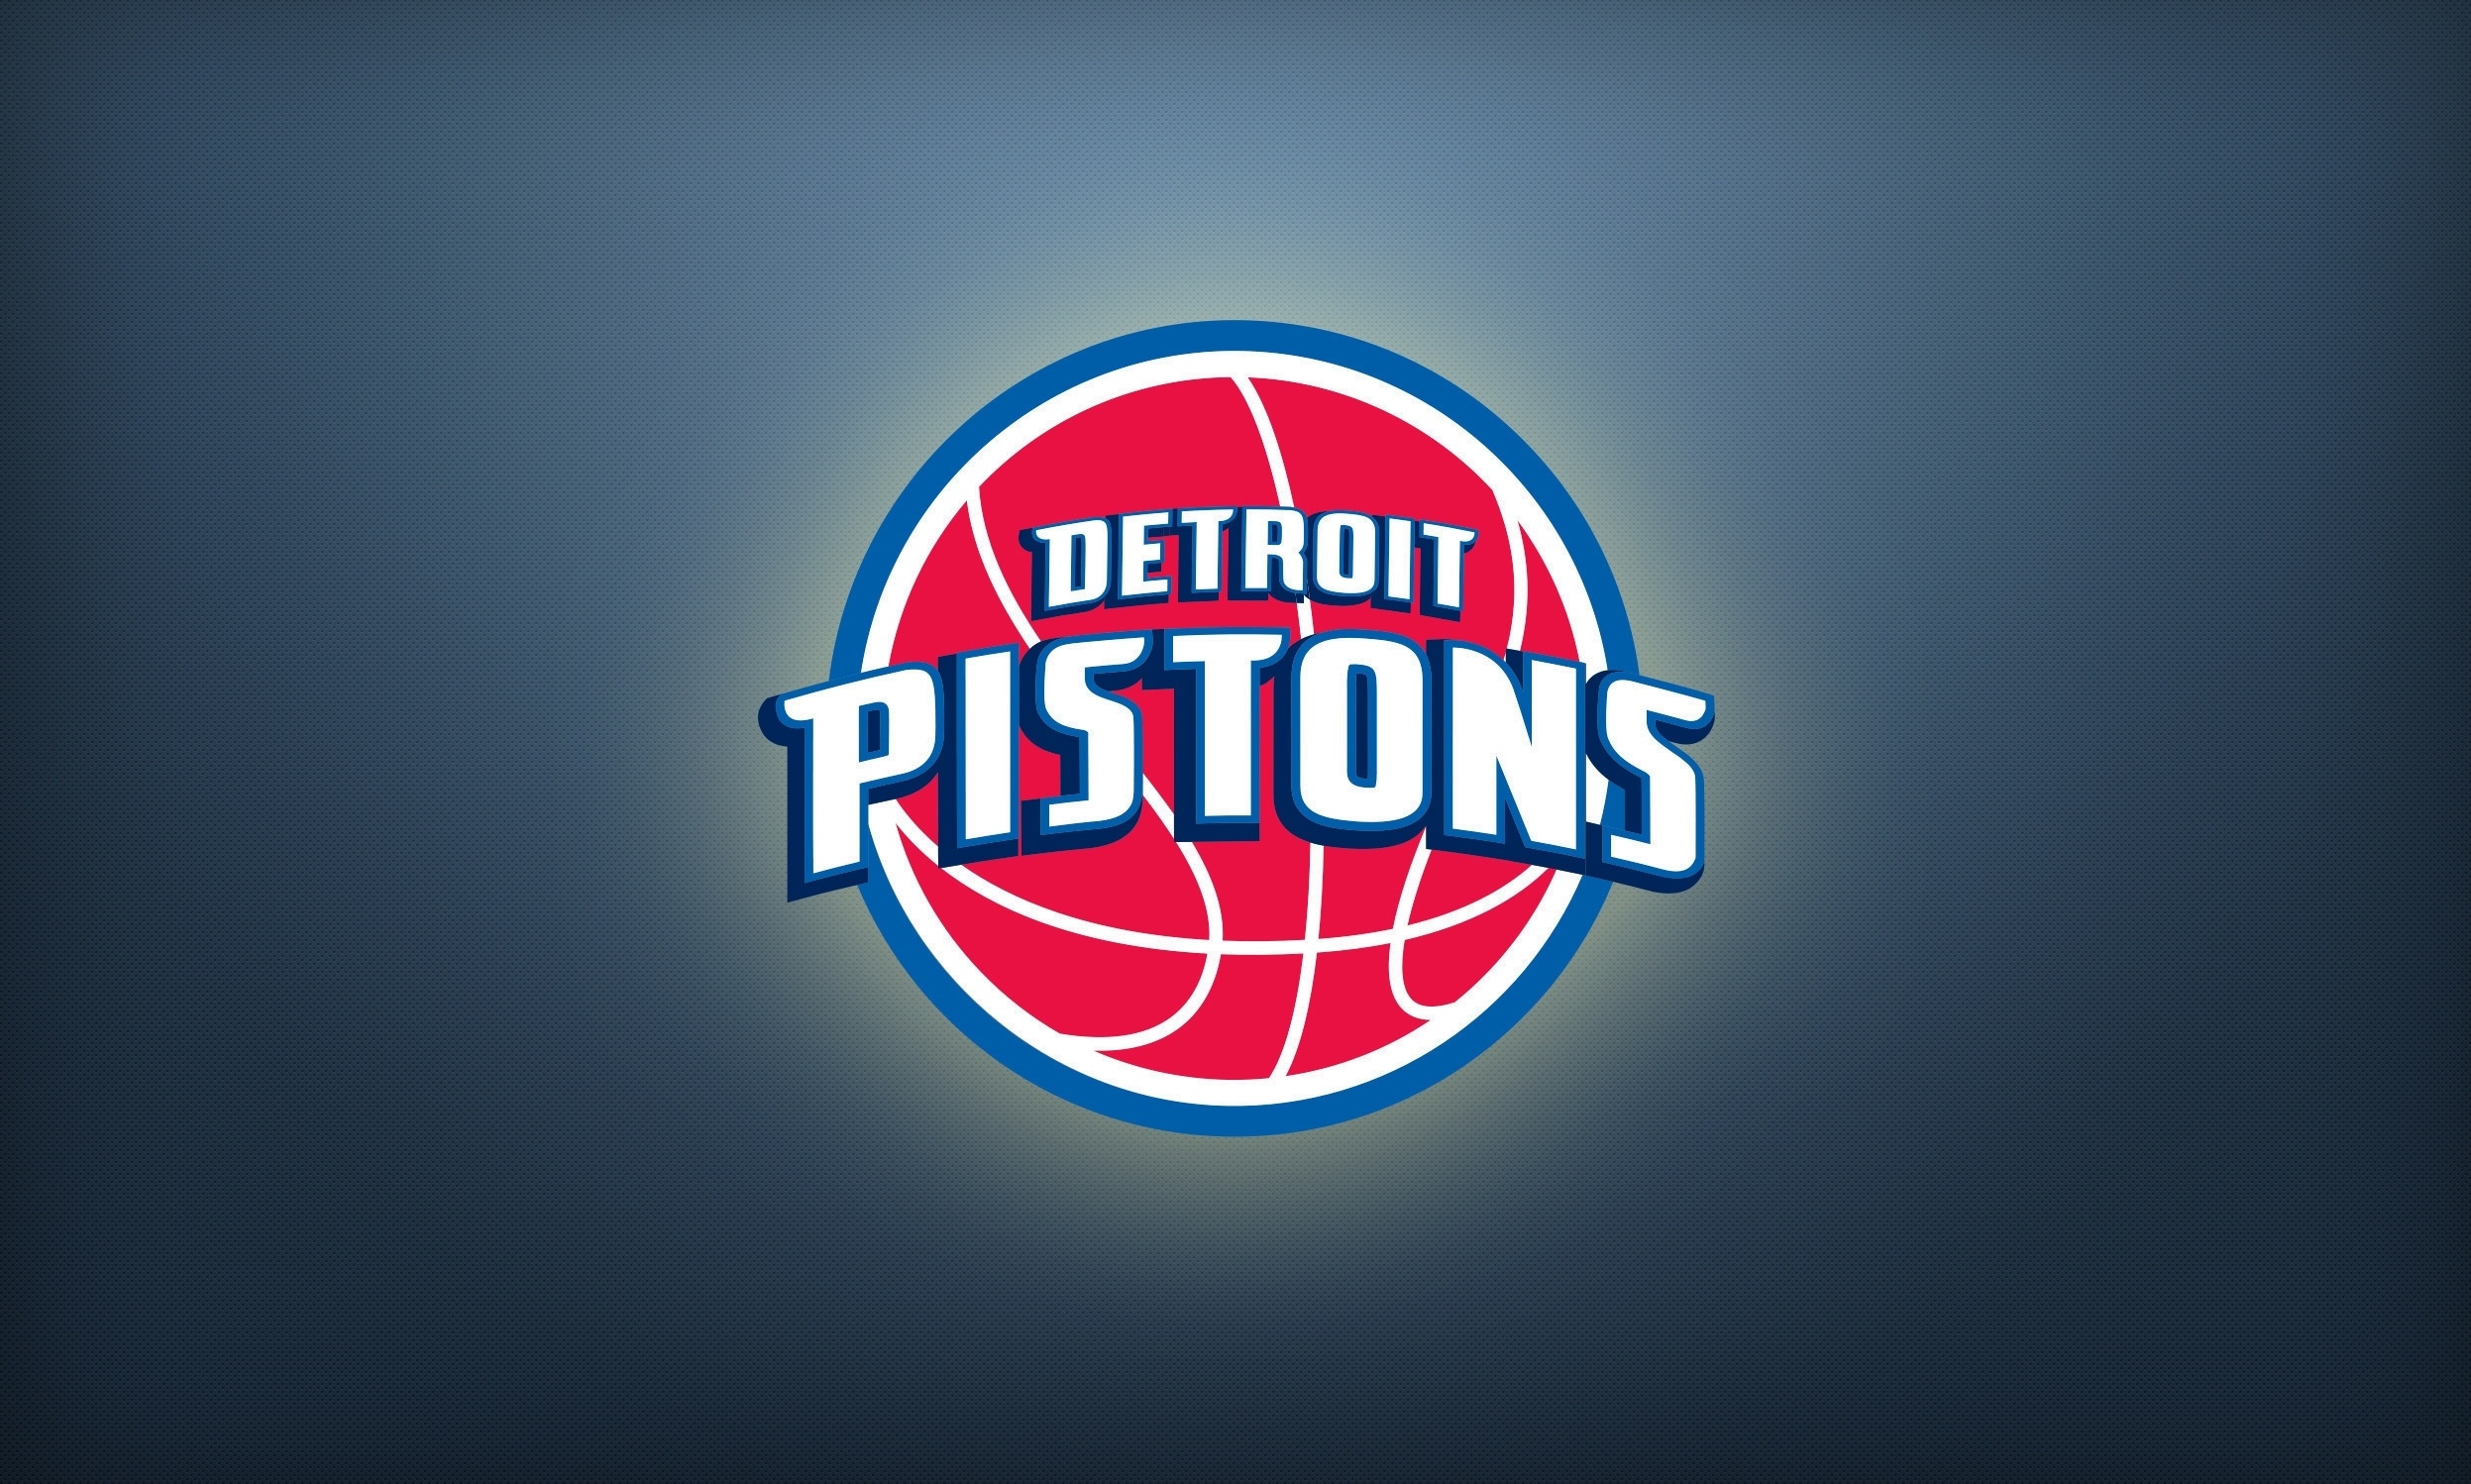 Detroit pistons. Детройт Пистонс лого. Пистонс Детройт НБА мобайл. НБА логотип. Логотипы баскетбольных команд.